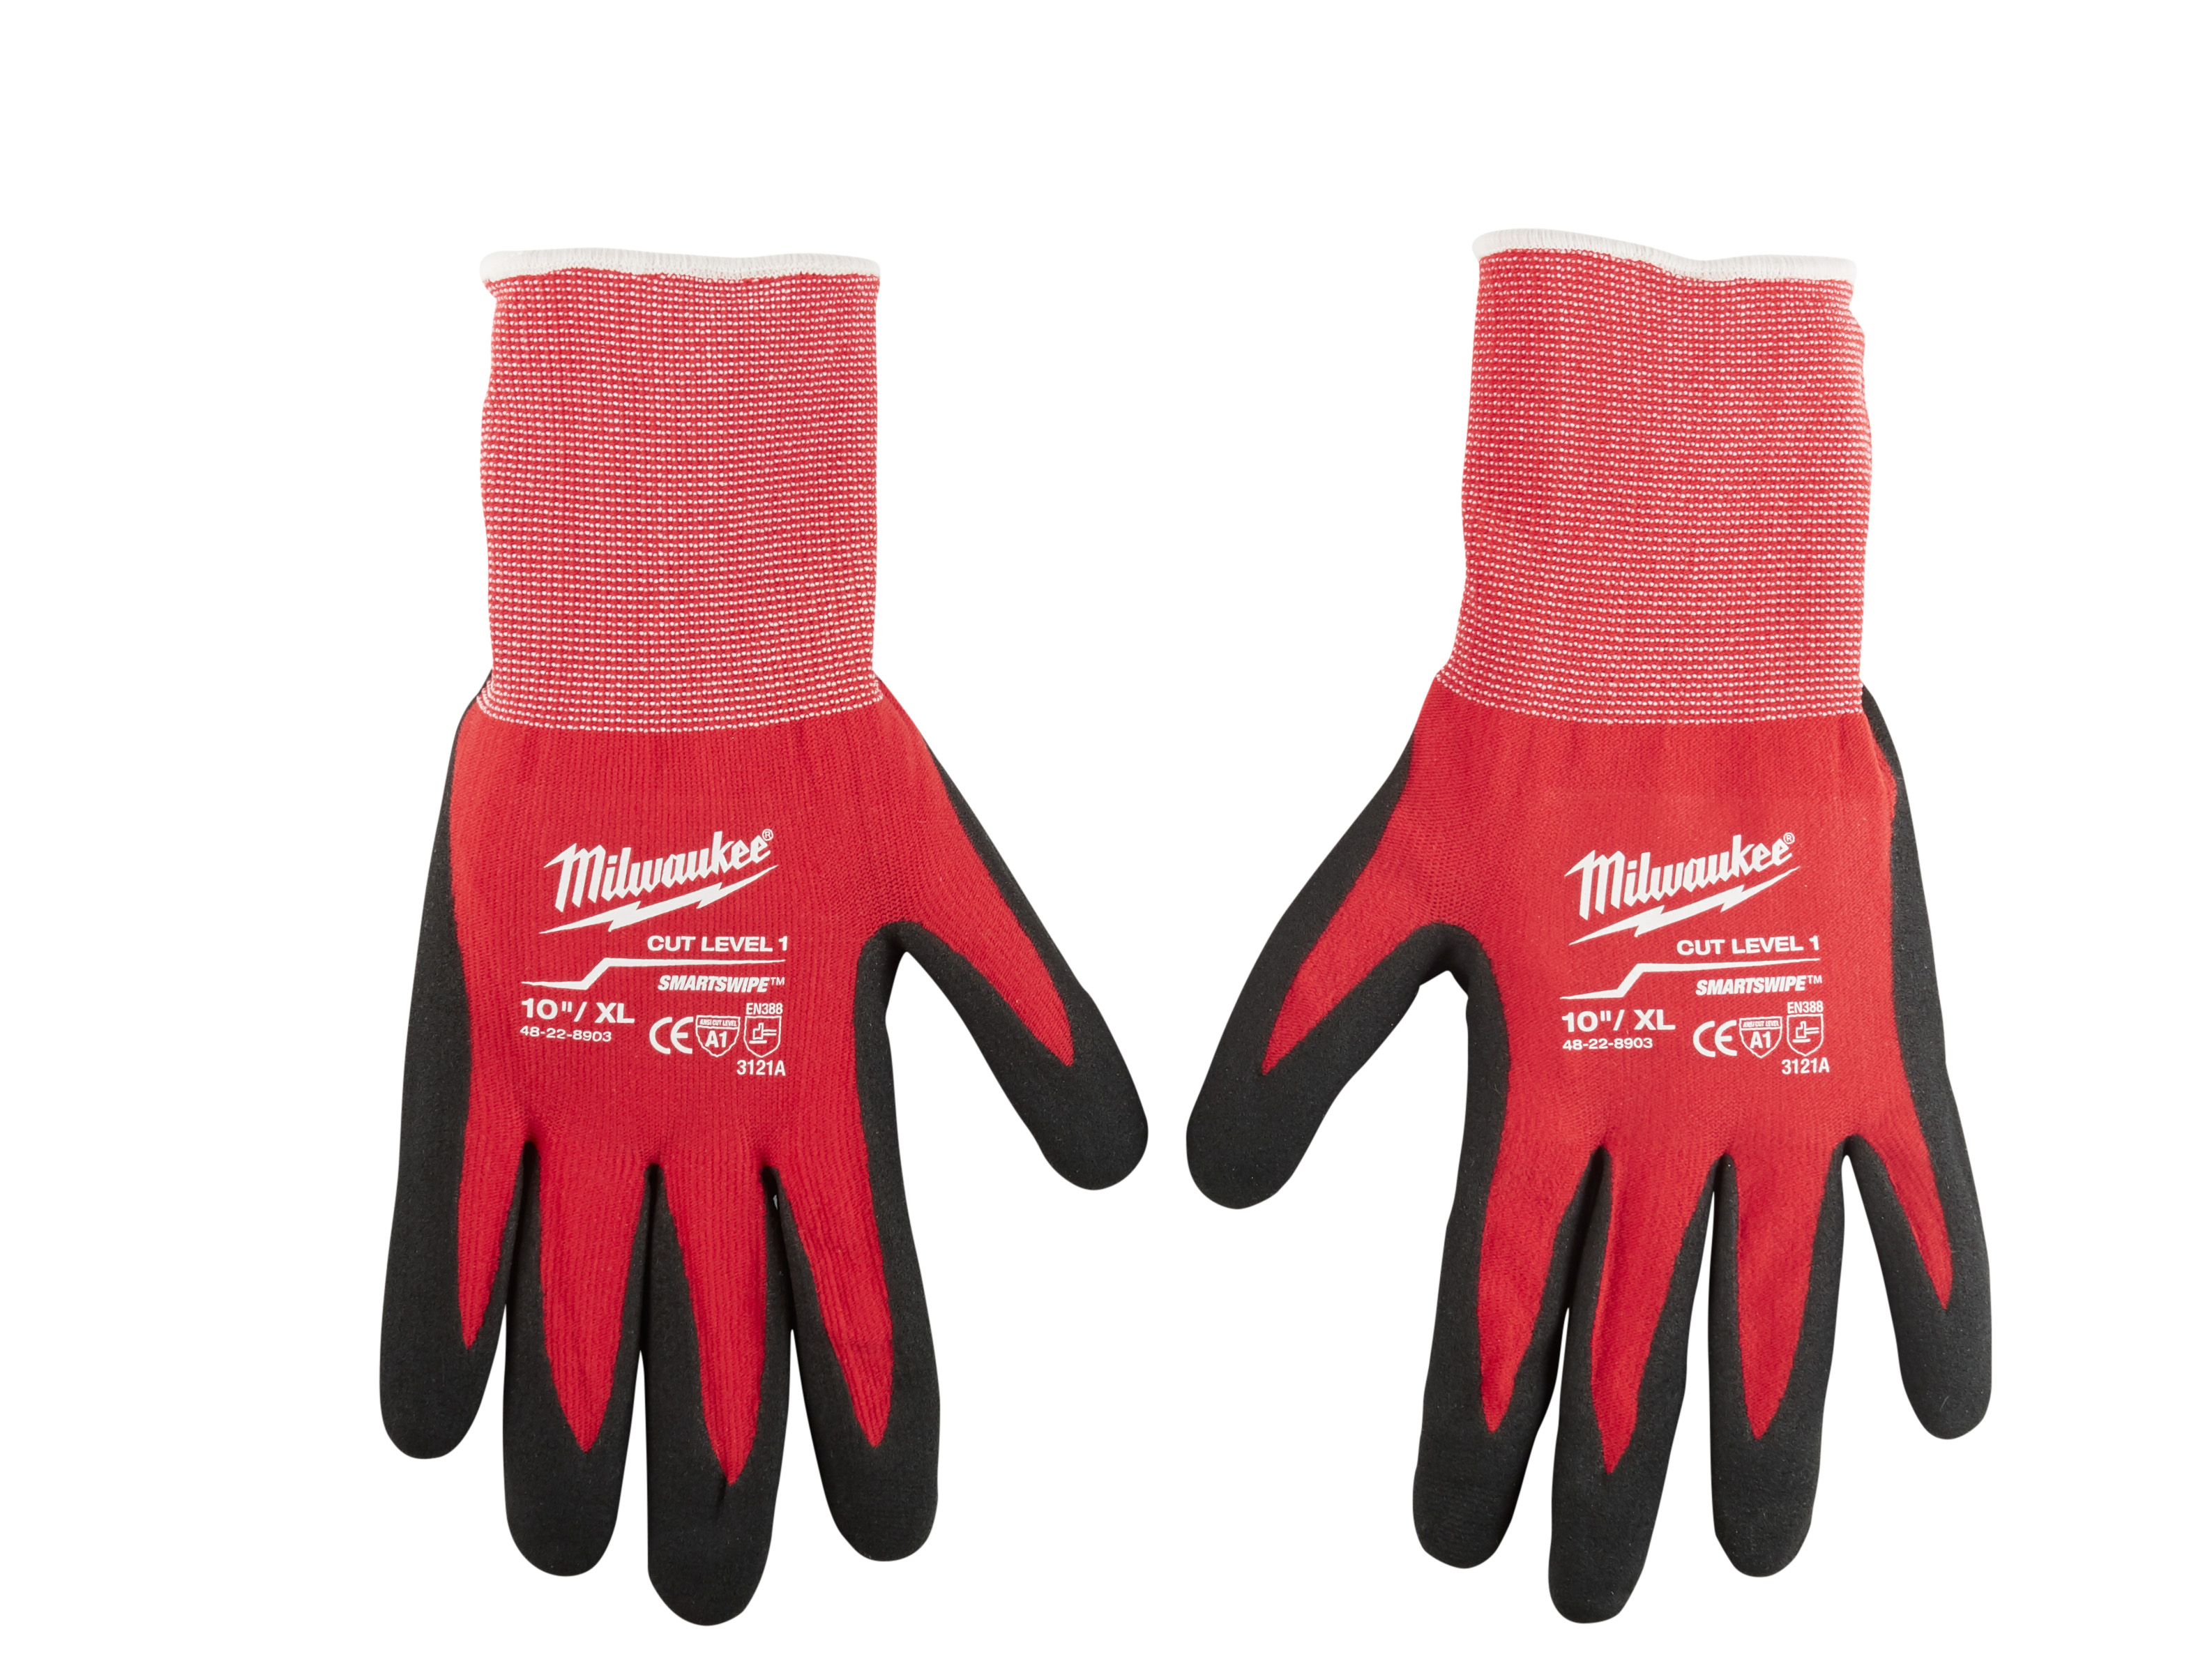 Cut 1 Dipped Gloves - XL - 12 Pack